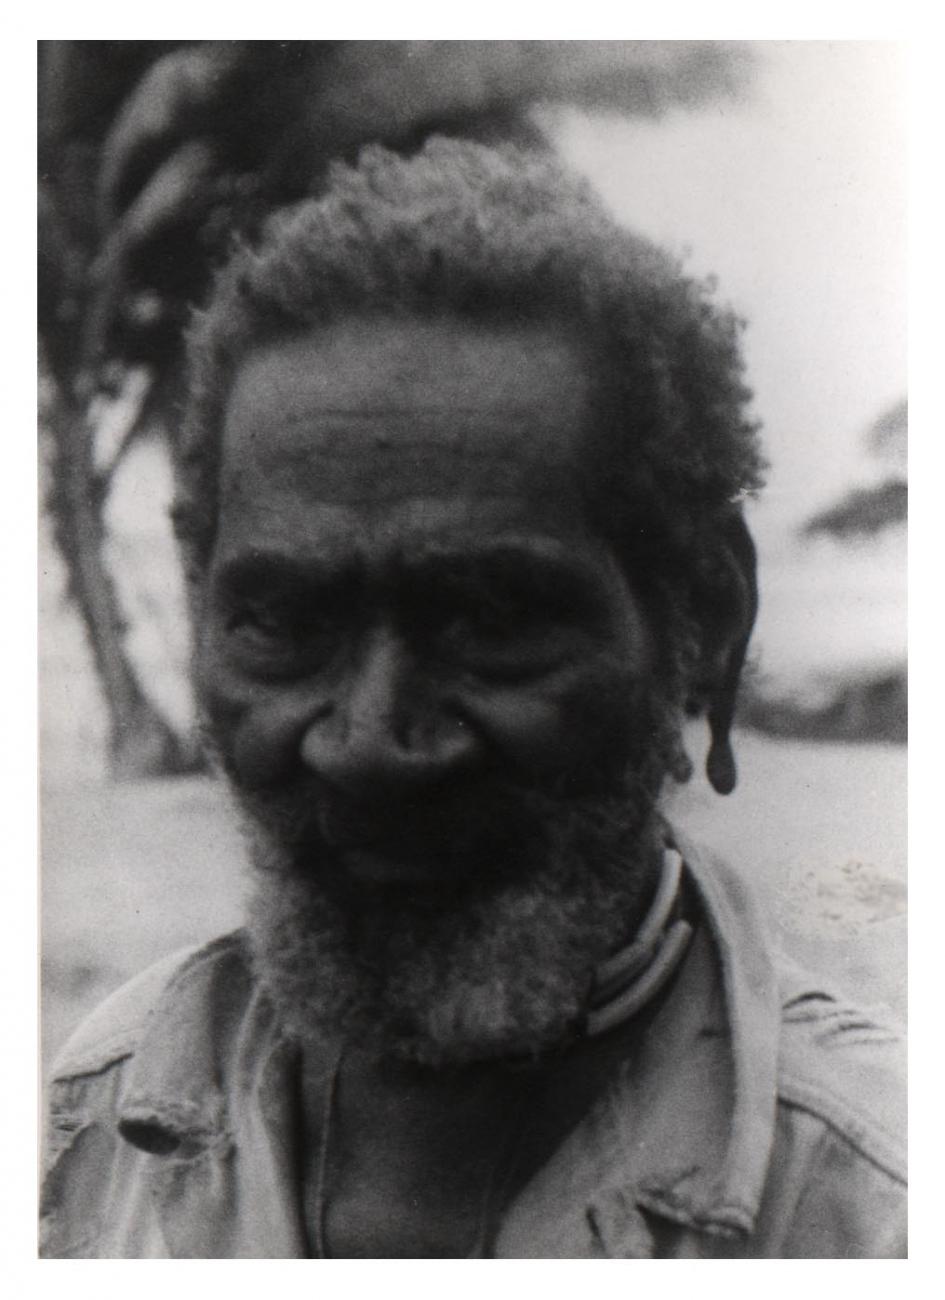 BD/54/52 - 
Kampong lampol I, Merauke, portrait of a Papuan
